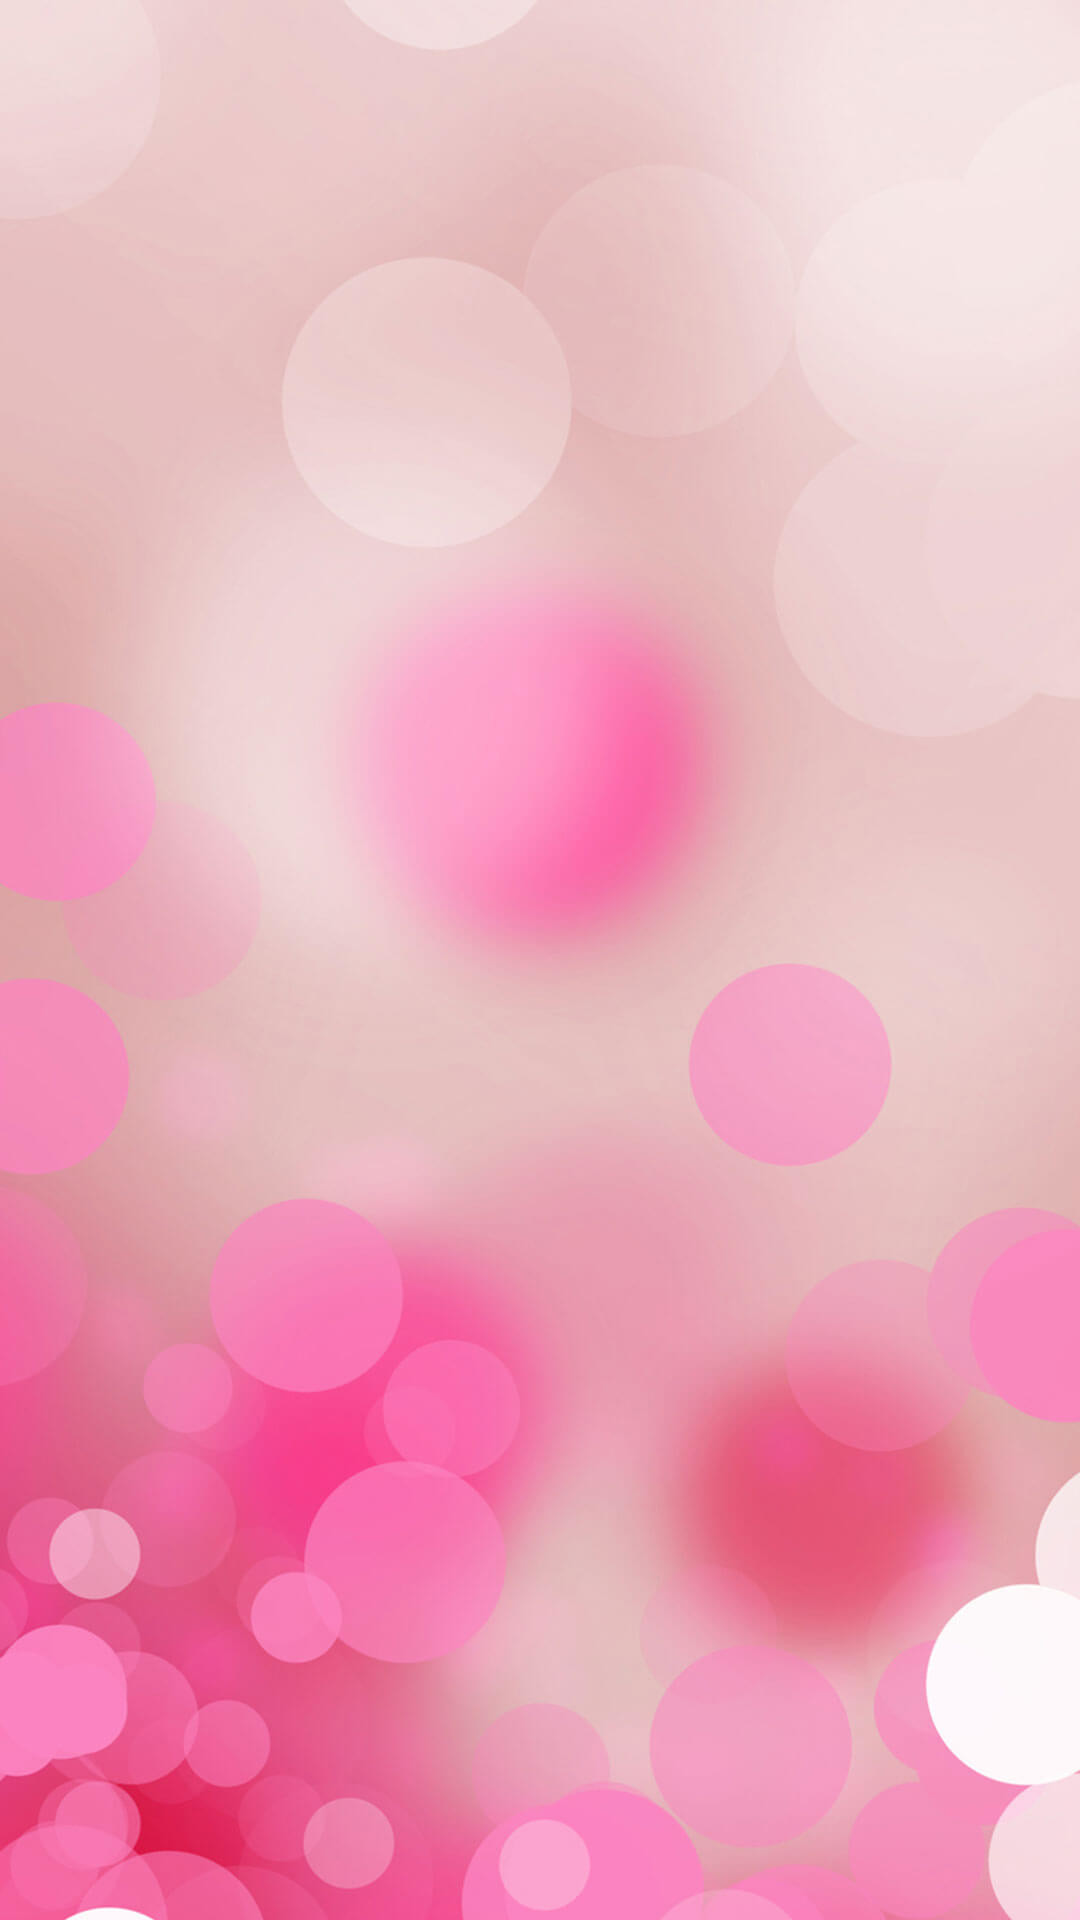 1080x1920 Cool Pink iPhone 6 Wallpaper Tumblr - HD Wallpaper iPhone